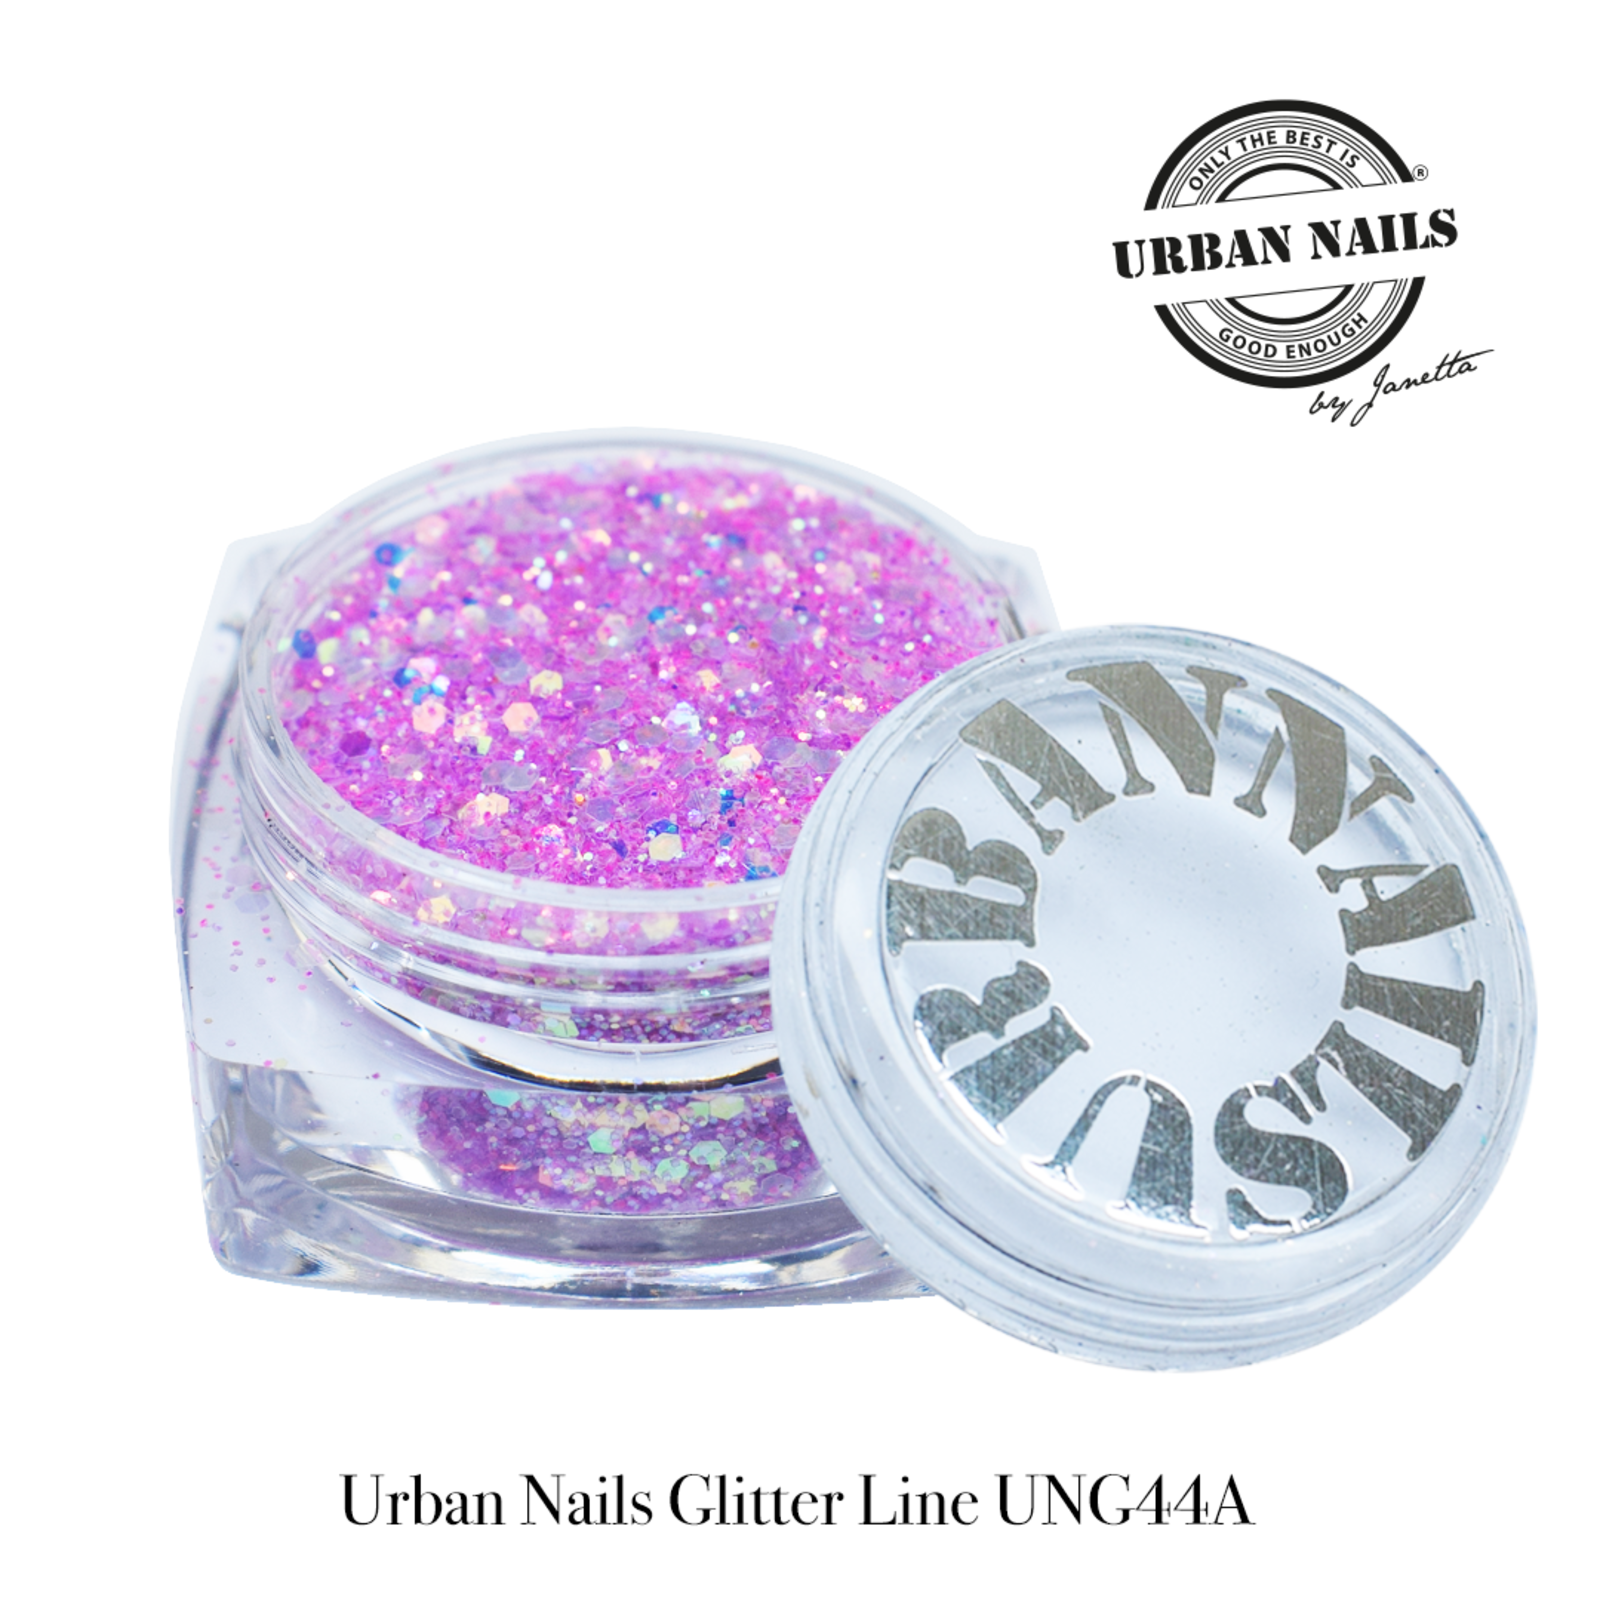 Urban nails Glitter Line UNG44-A